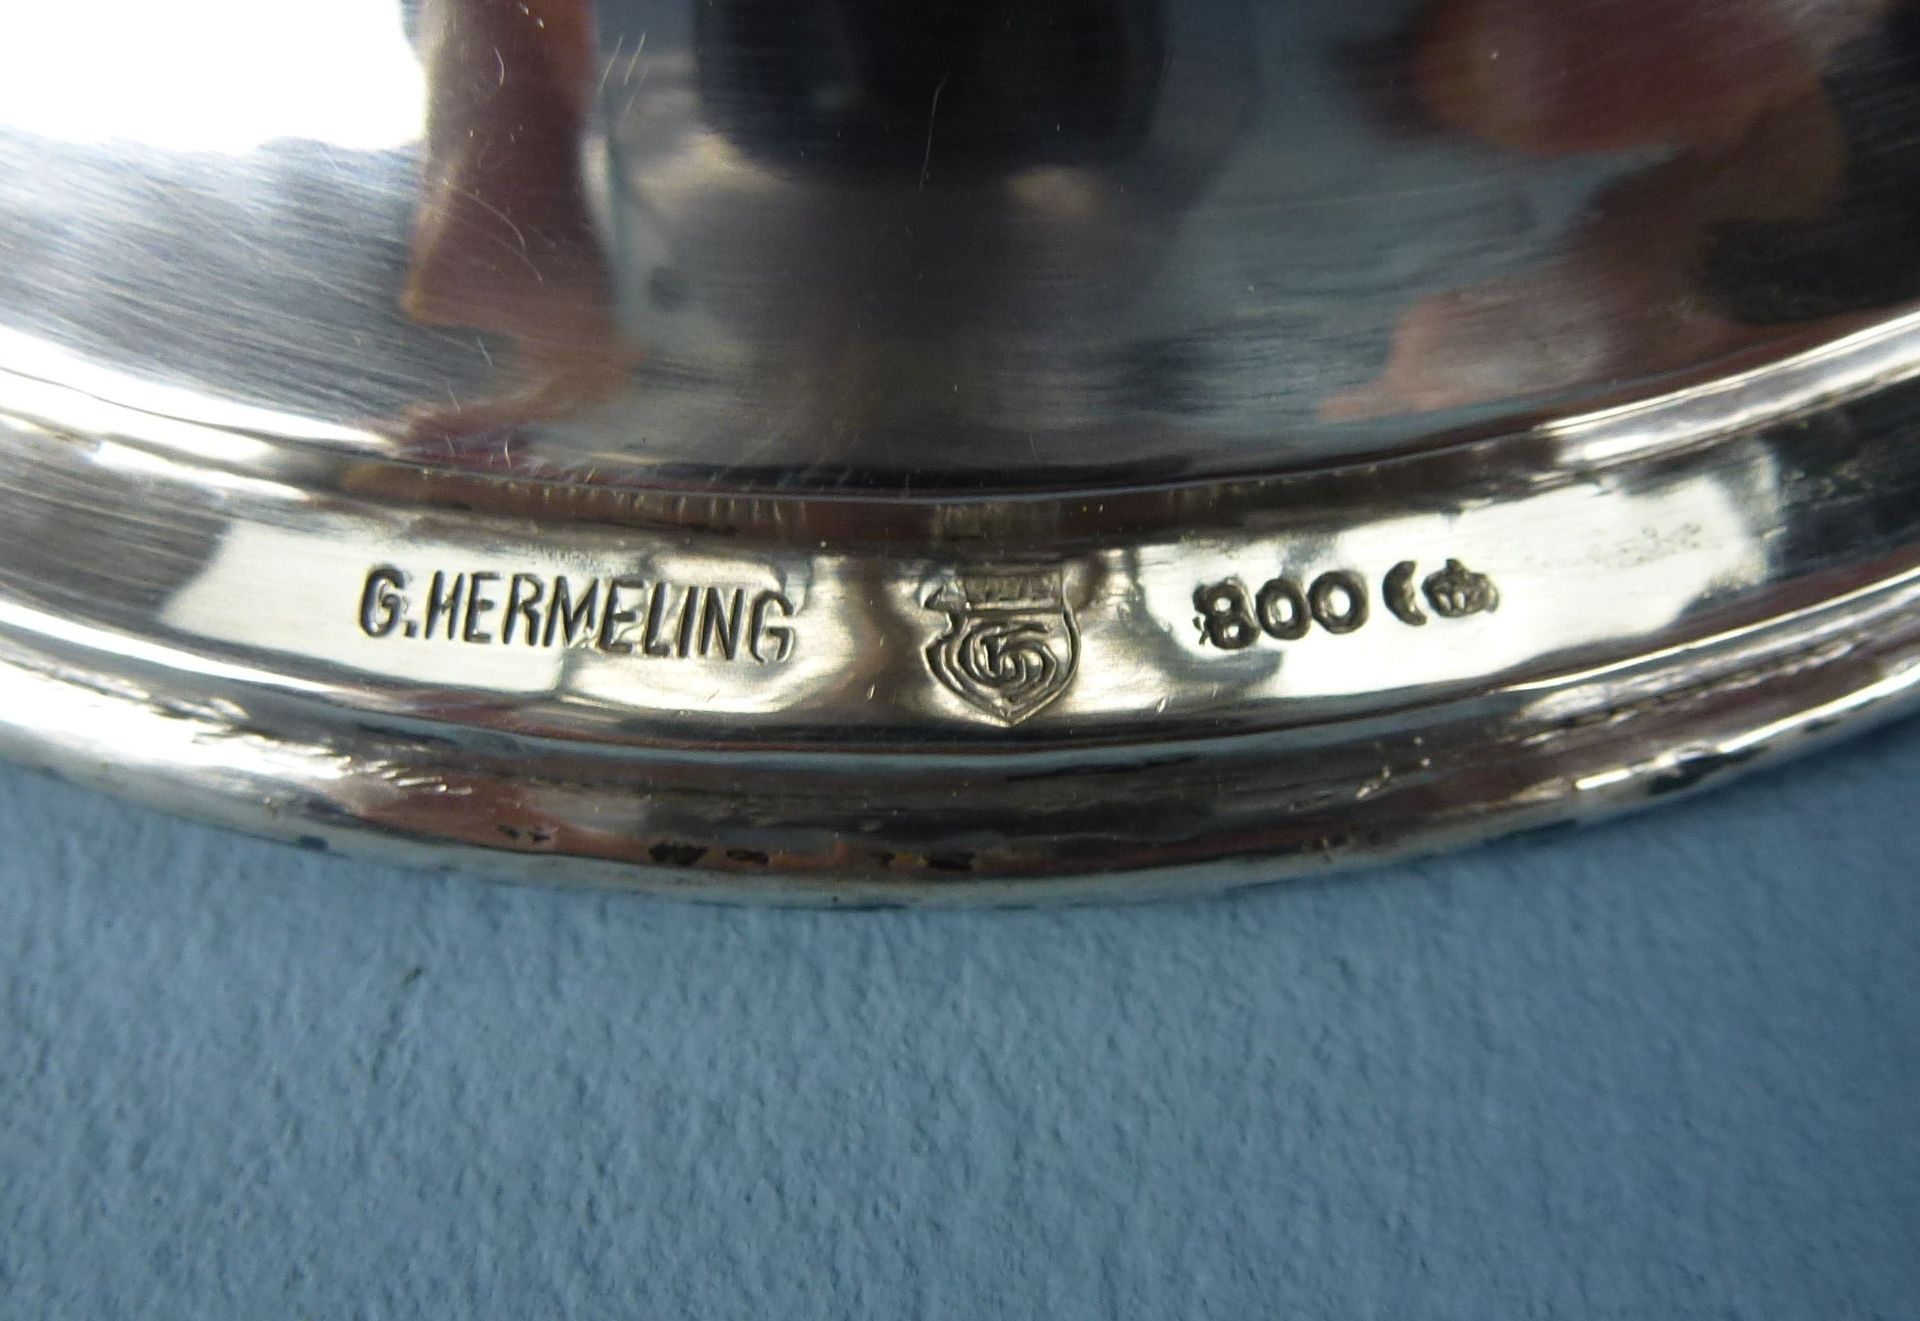 Ballonfahrt-Pokal, Gabriel Hermeling, Köln um 1910, 800er Silber - Bild 6 aus 8